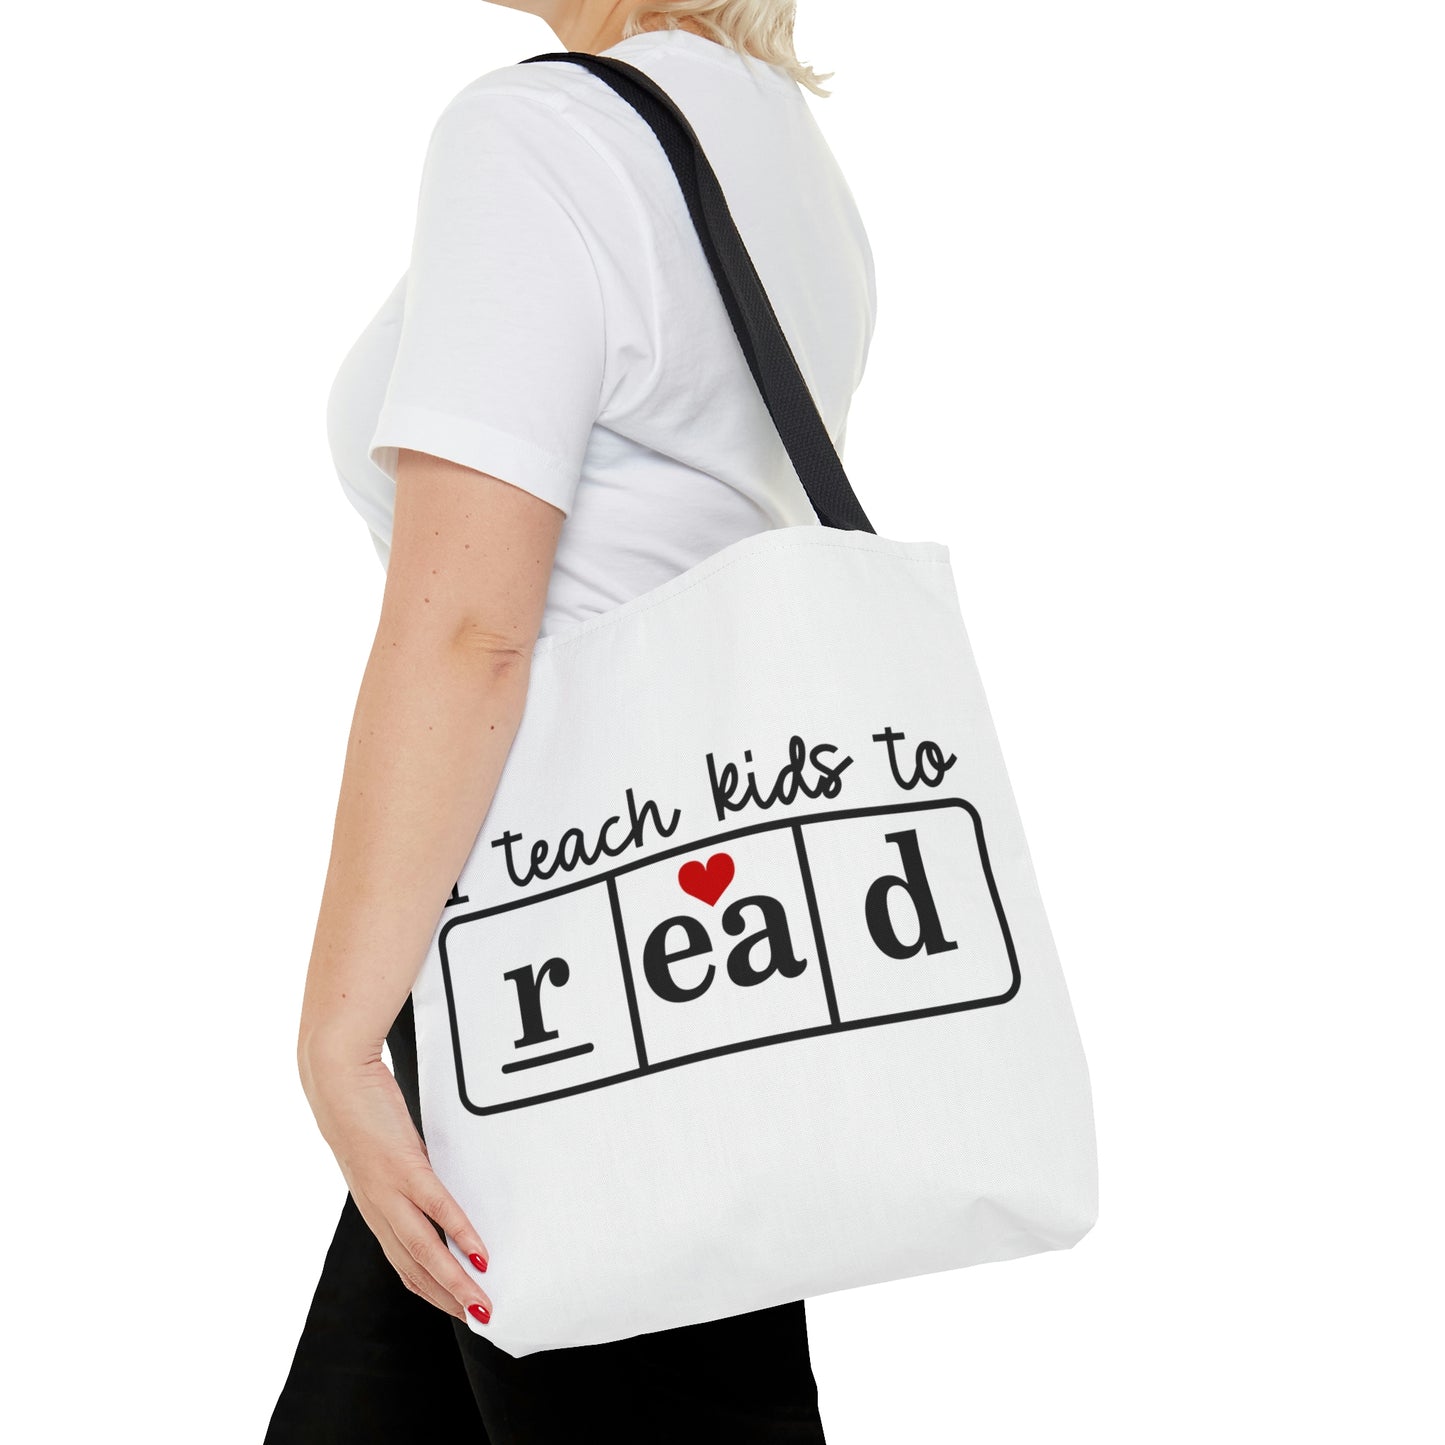 "I teach kids to read" & "Educational Rockstar" Tote Bag